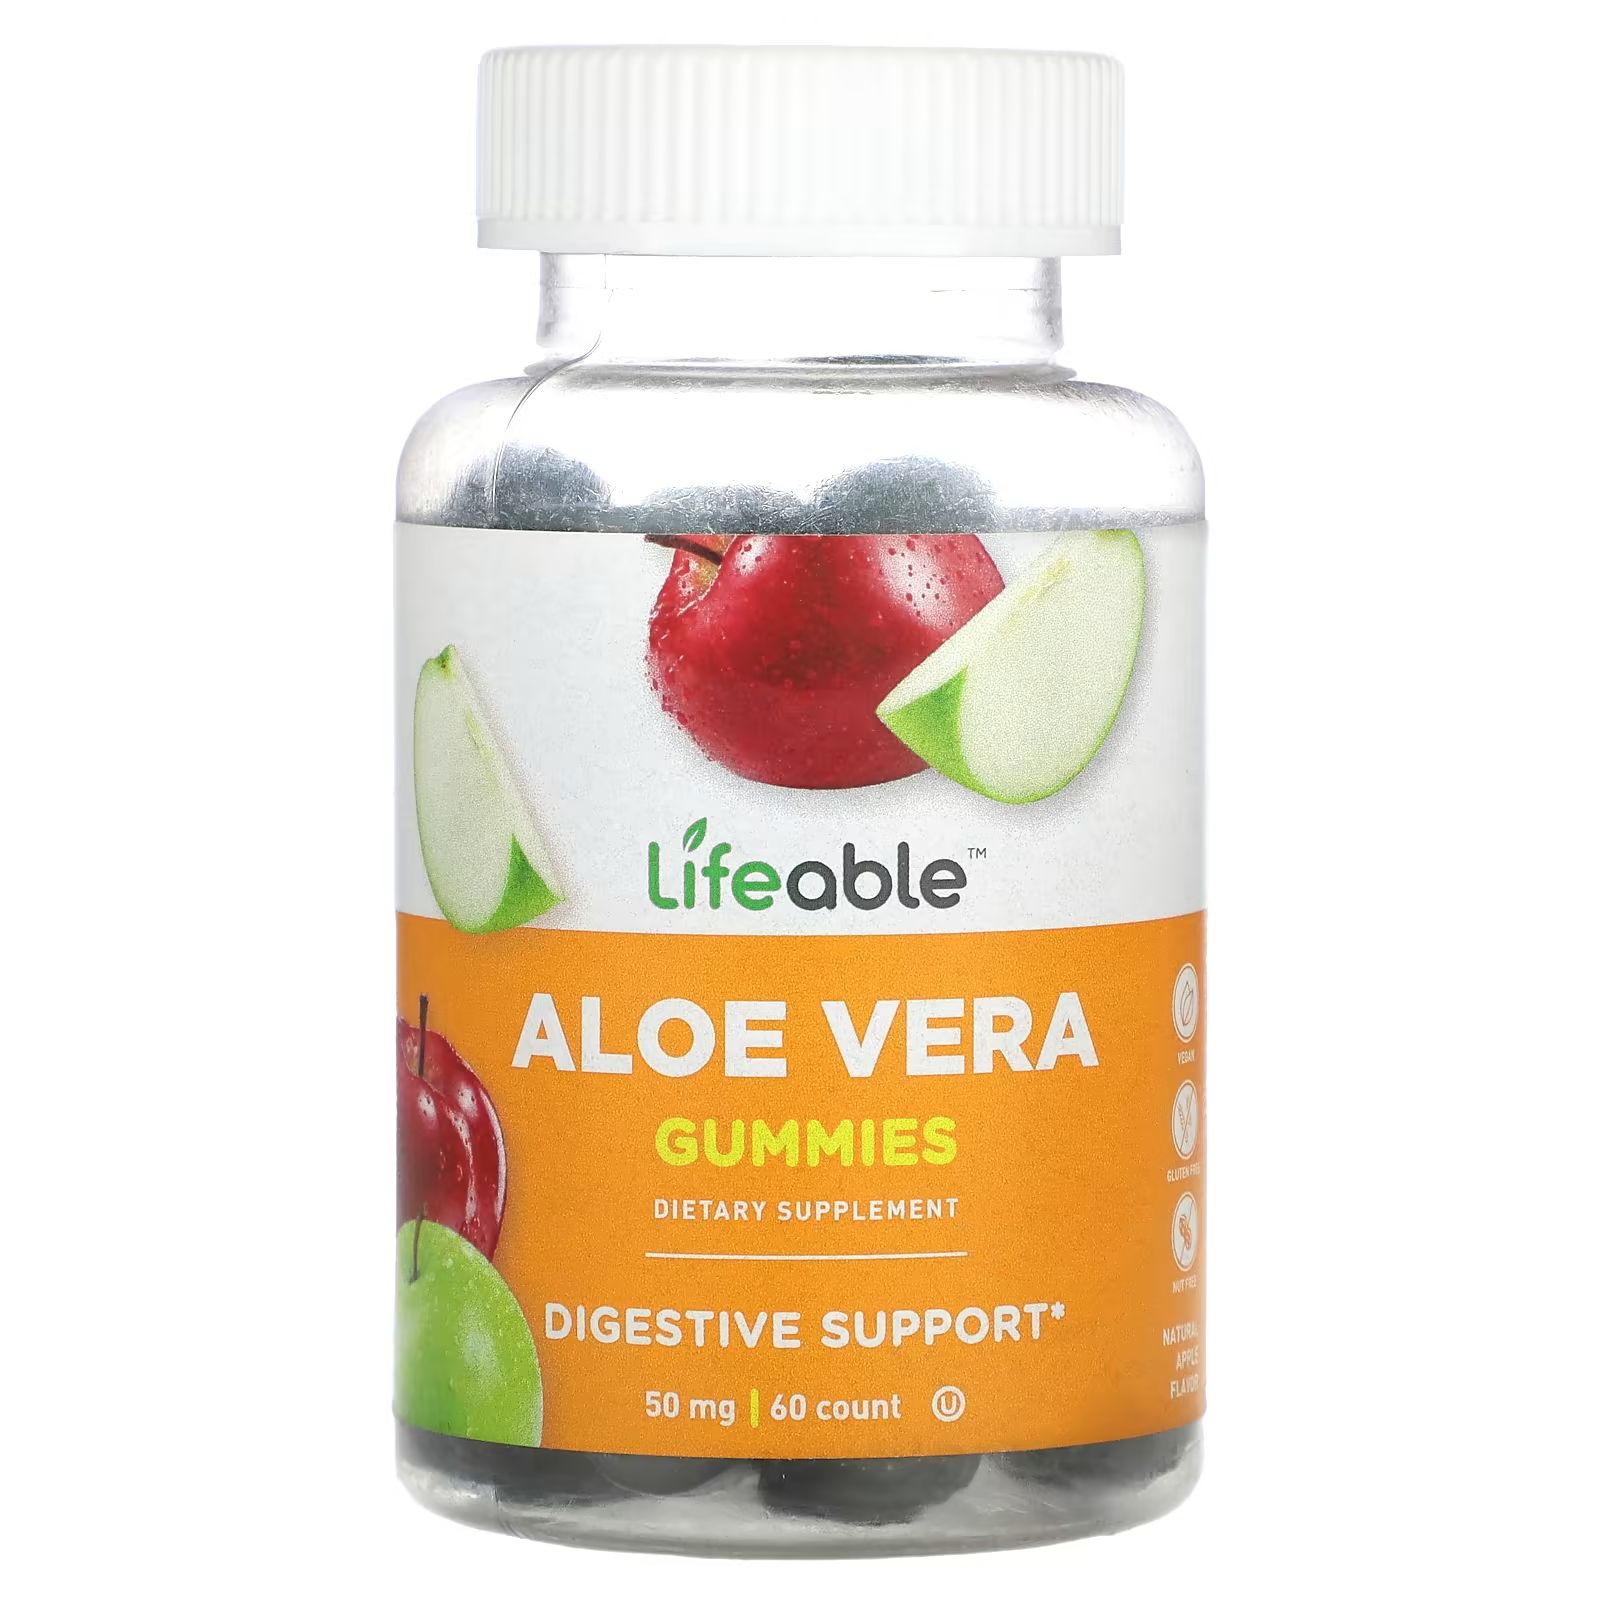 Пищевая добавка Lifeable Aloe Vera Gummies Natural Apple, 60 жевательных таблеток пищевая добавка lifeable aloe vera gummies natural apple 60 жевательных таблеток